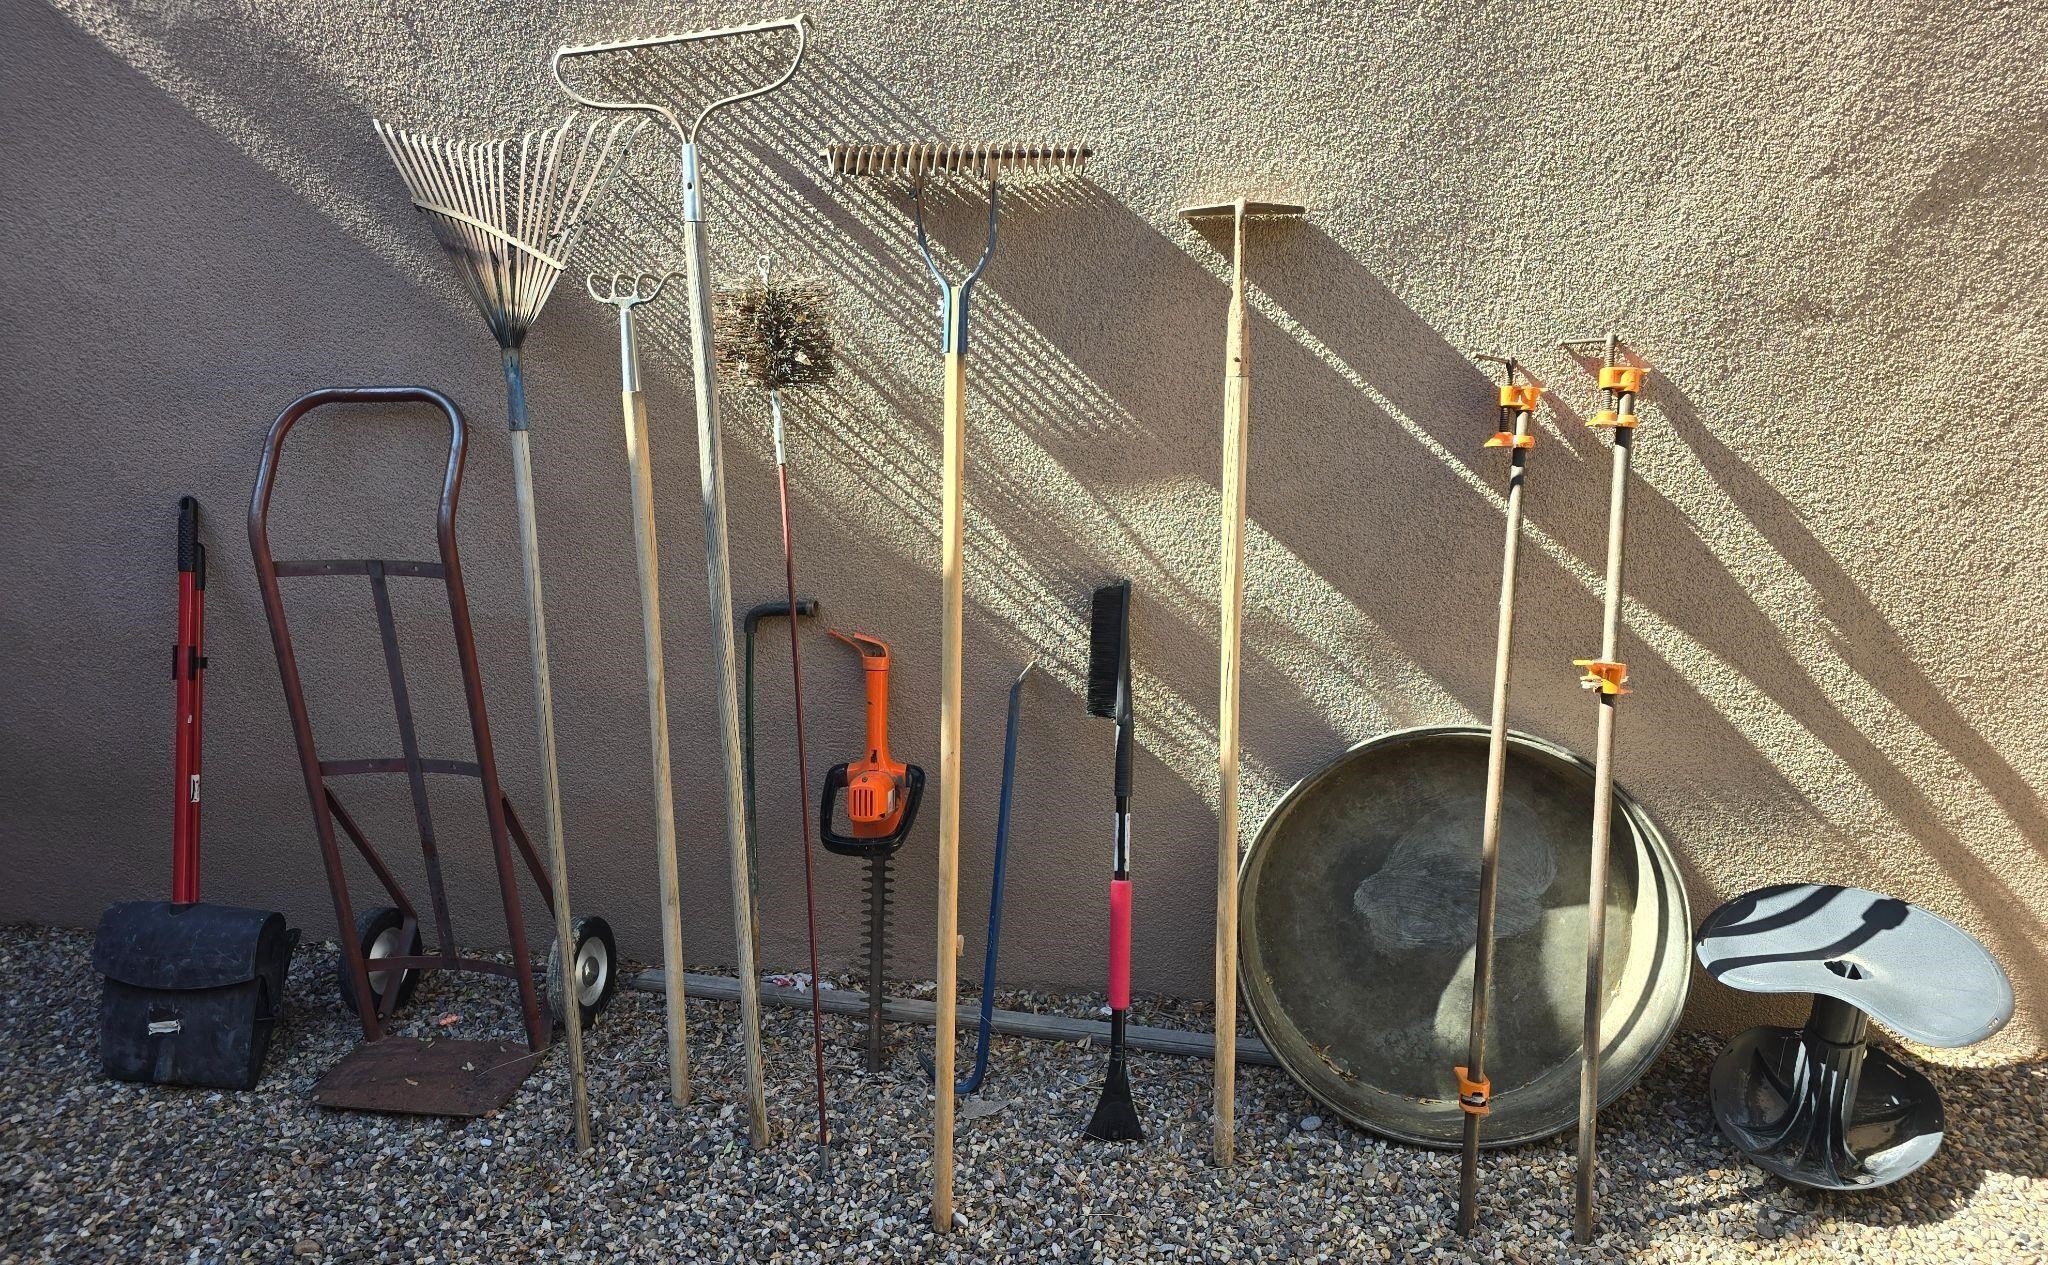 Lot of outdoor yard tools.